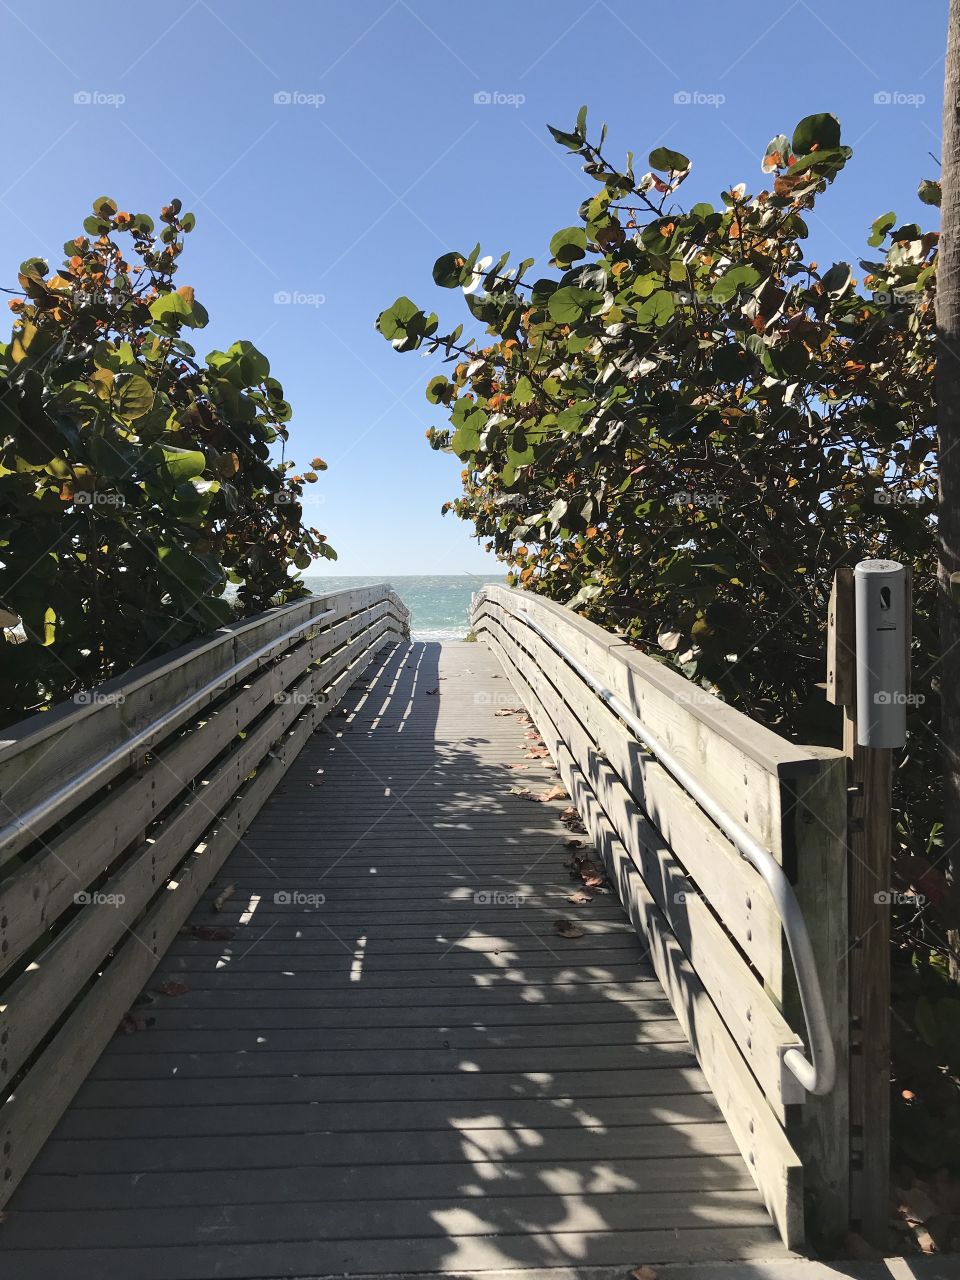 Bridge to the beach